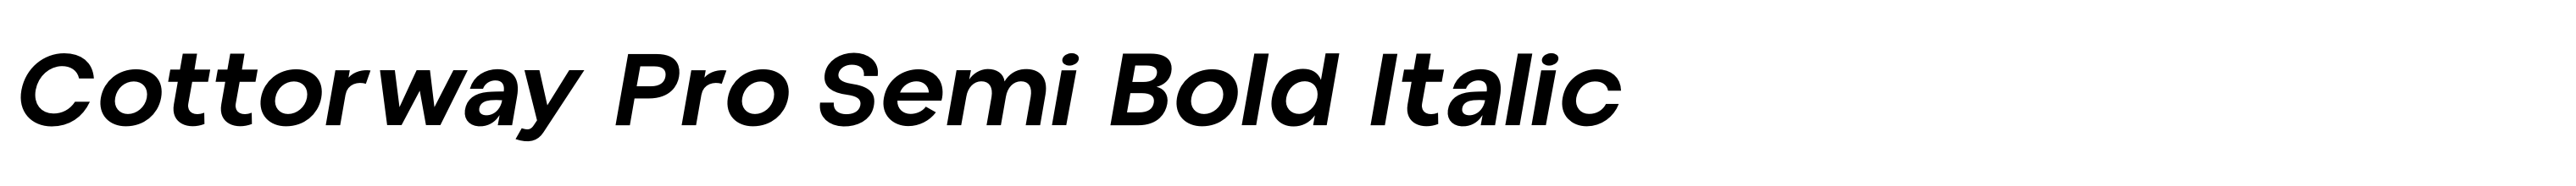 Cottorway Pro Semi Bold Italic